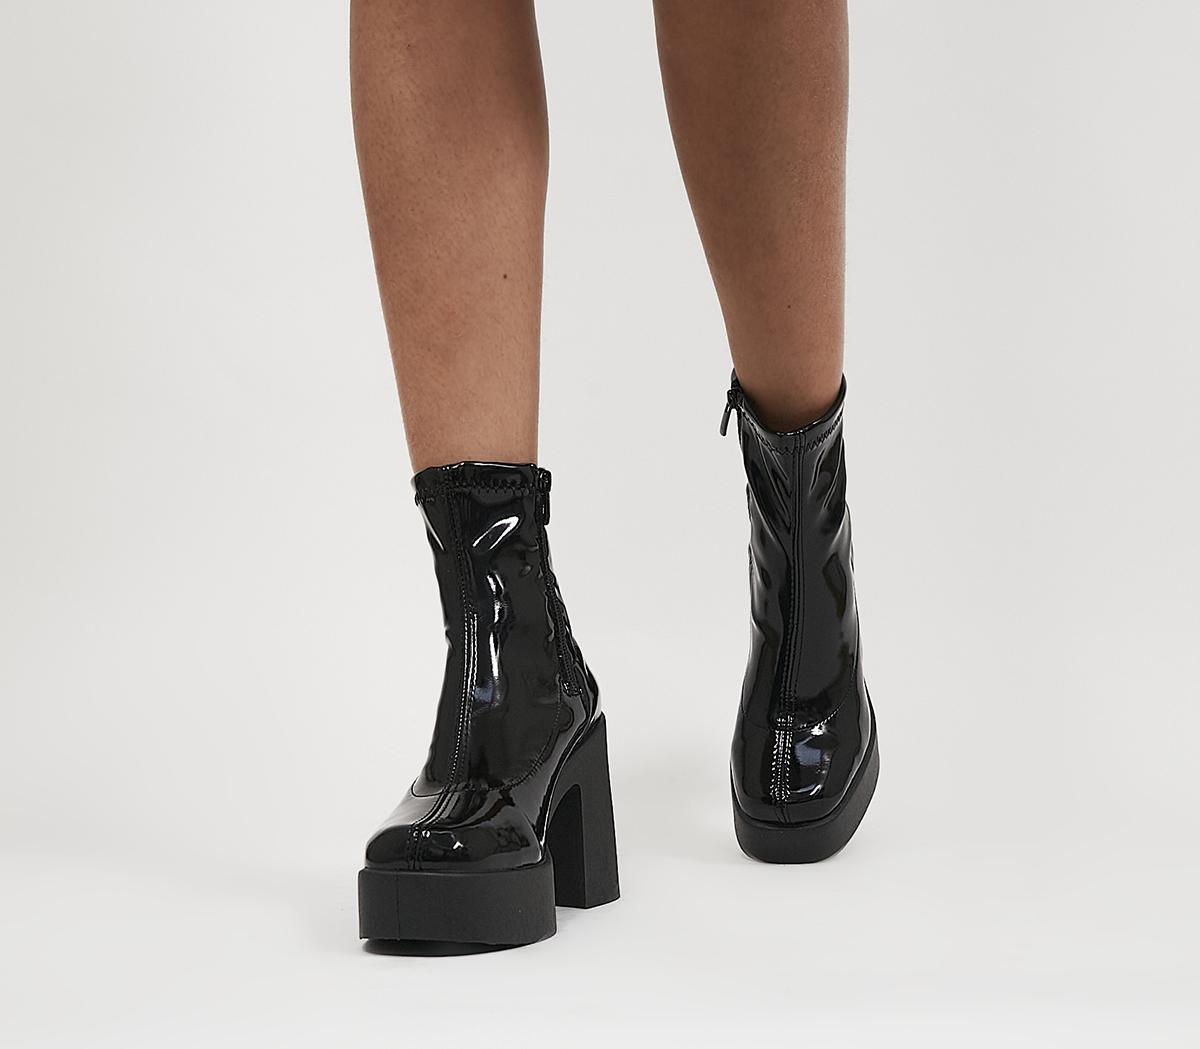 Hispanitas Charlize Boot Black patent Womens Heeled Boots HI233000-40